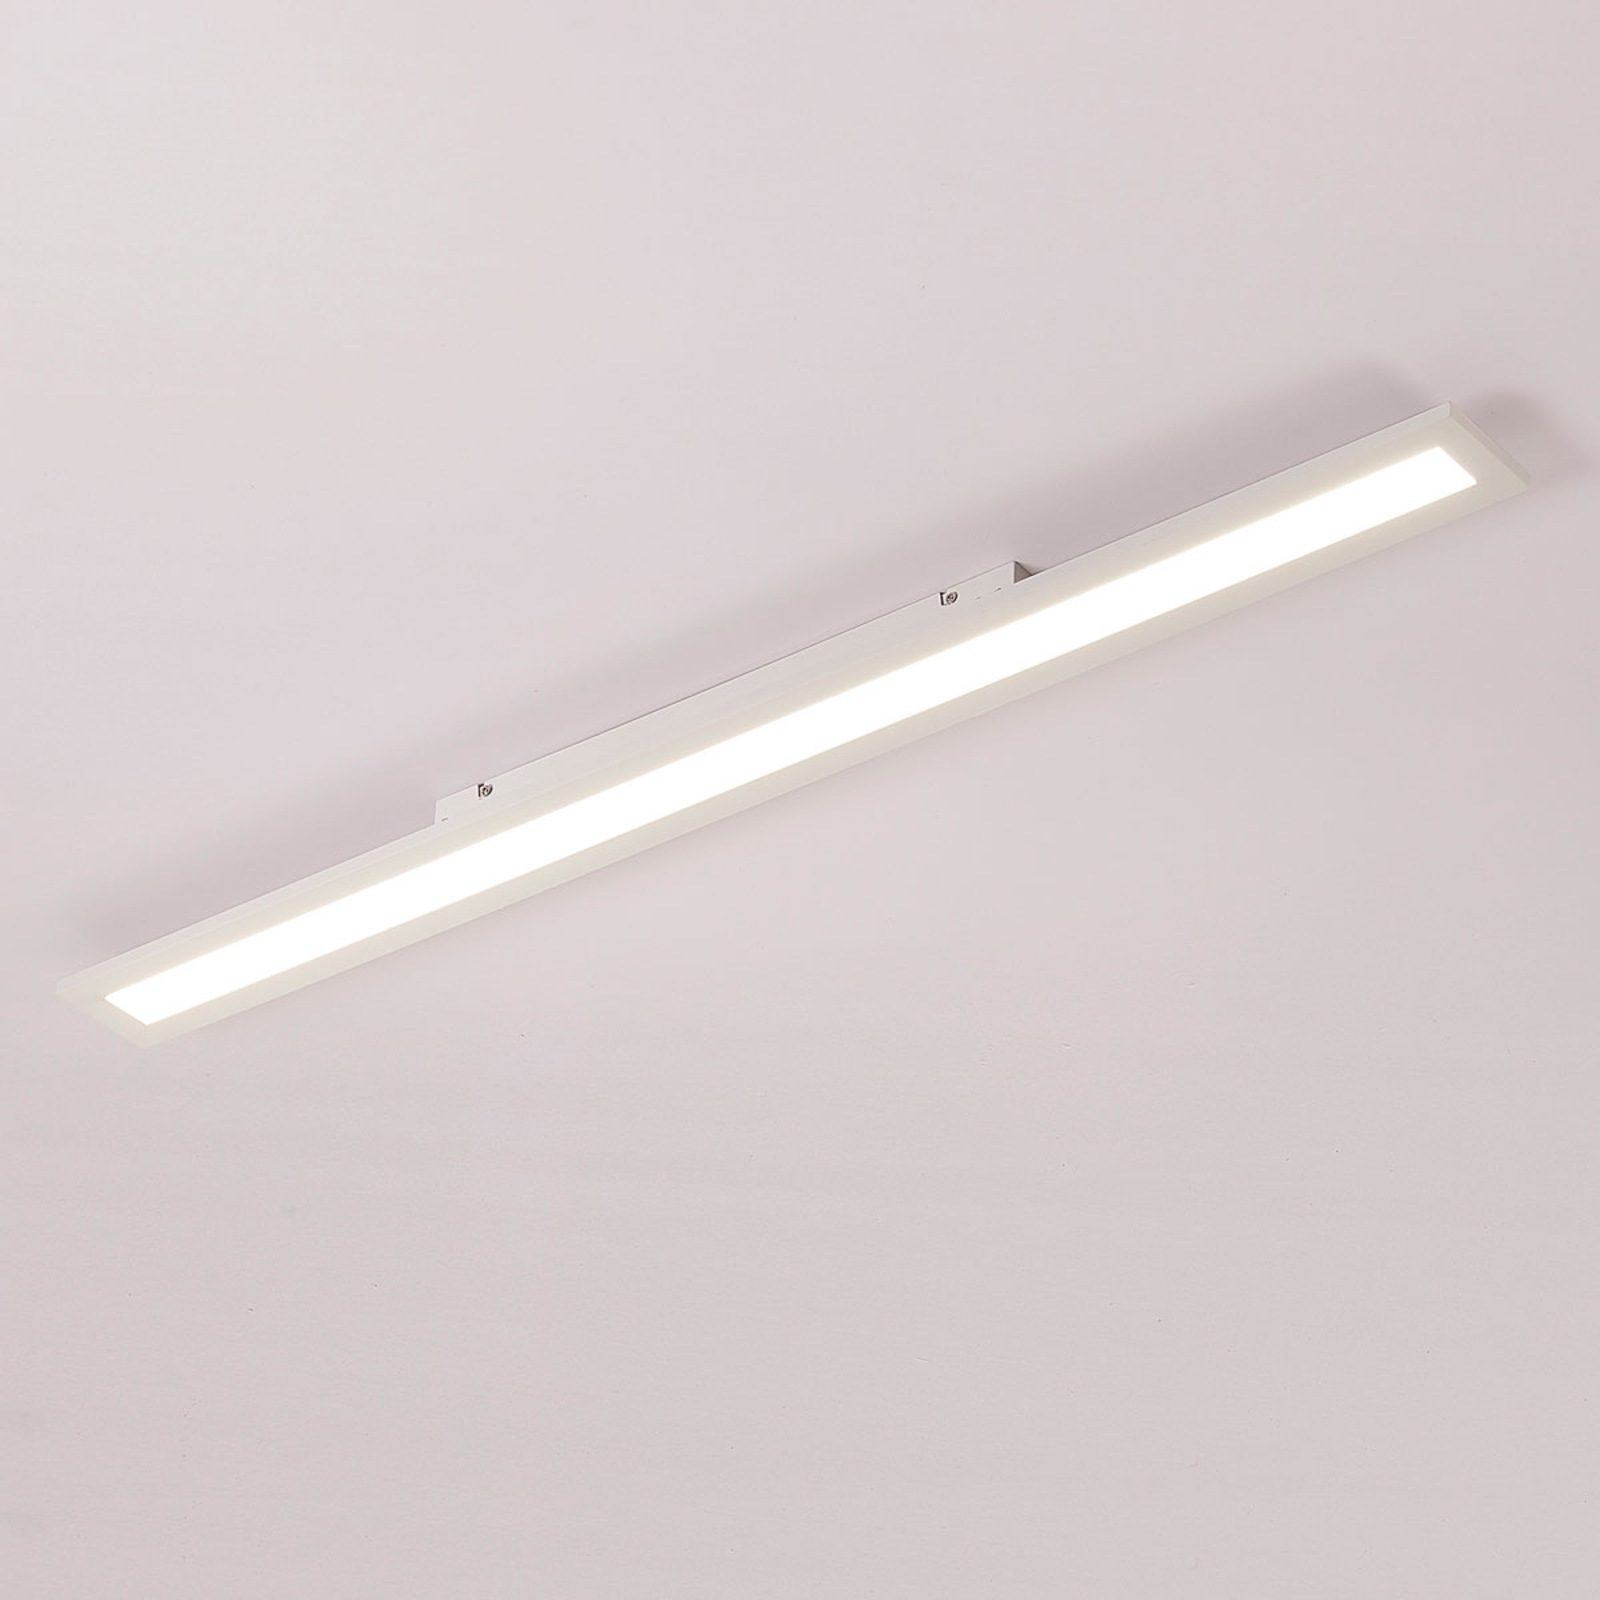 Arcchio Arya LED panel, dimmable, 119 cm x 10 cm | Lights.ie